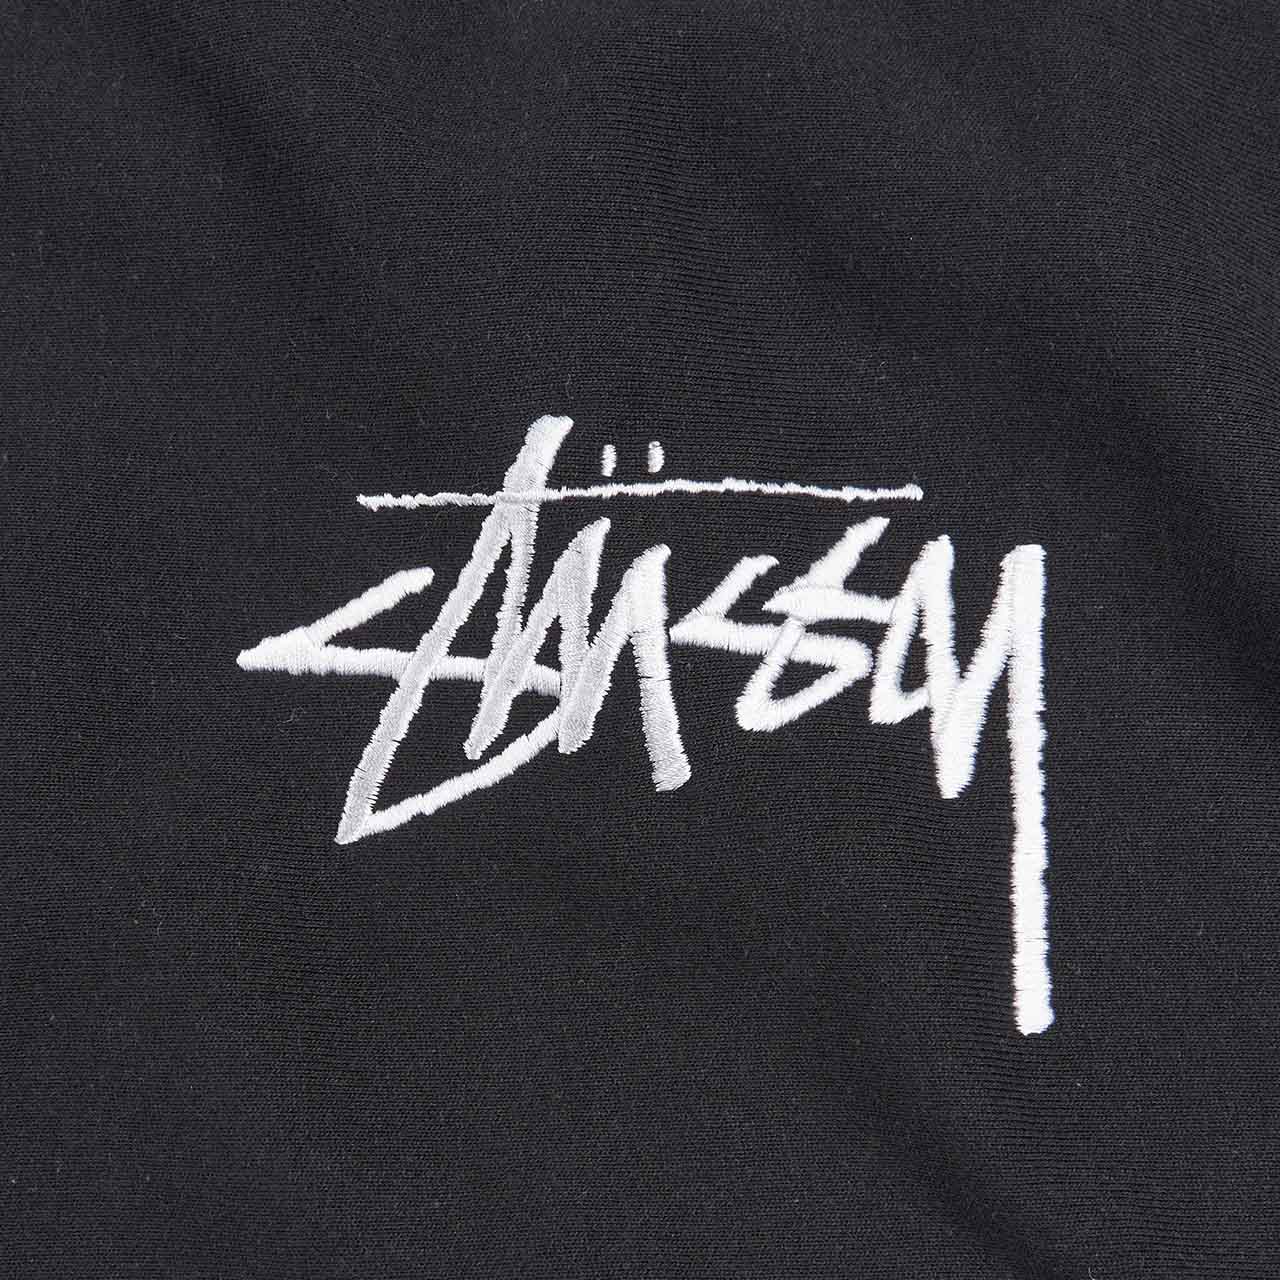 stüssy stock logo applique hoodie (black)